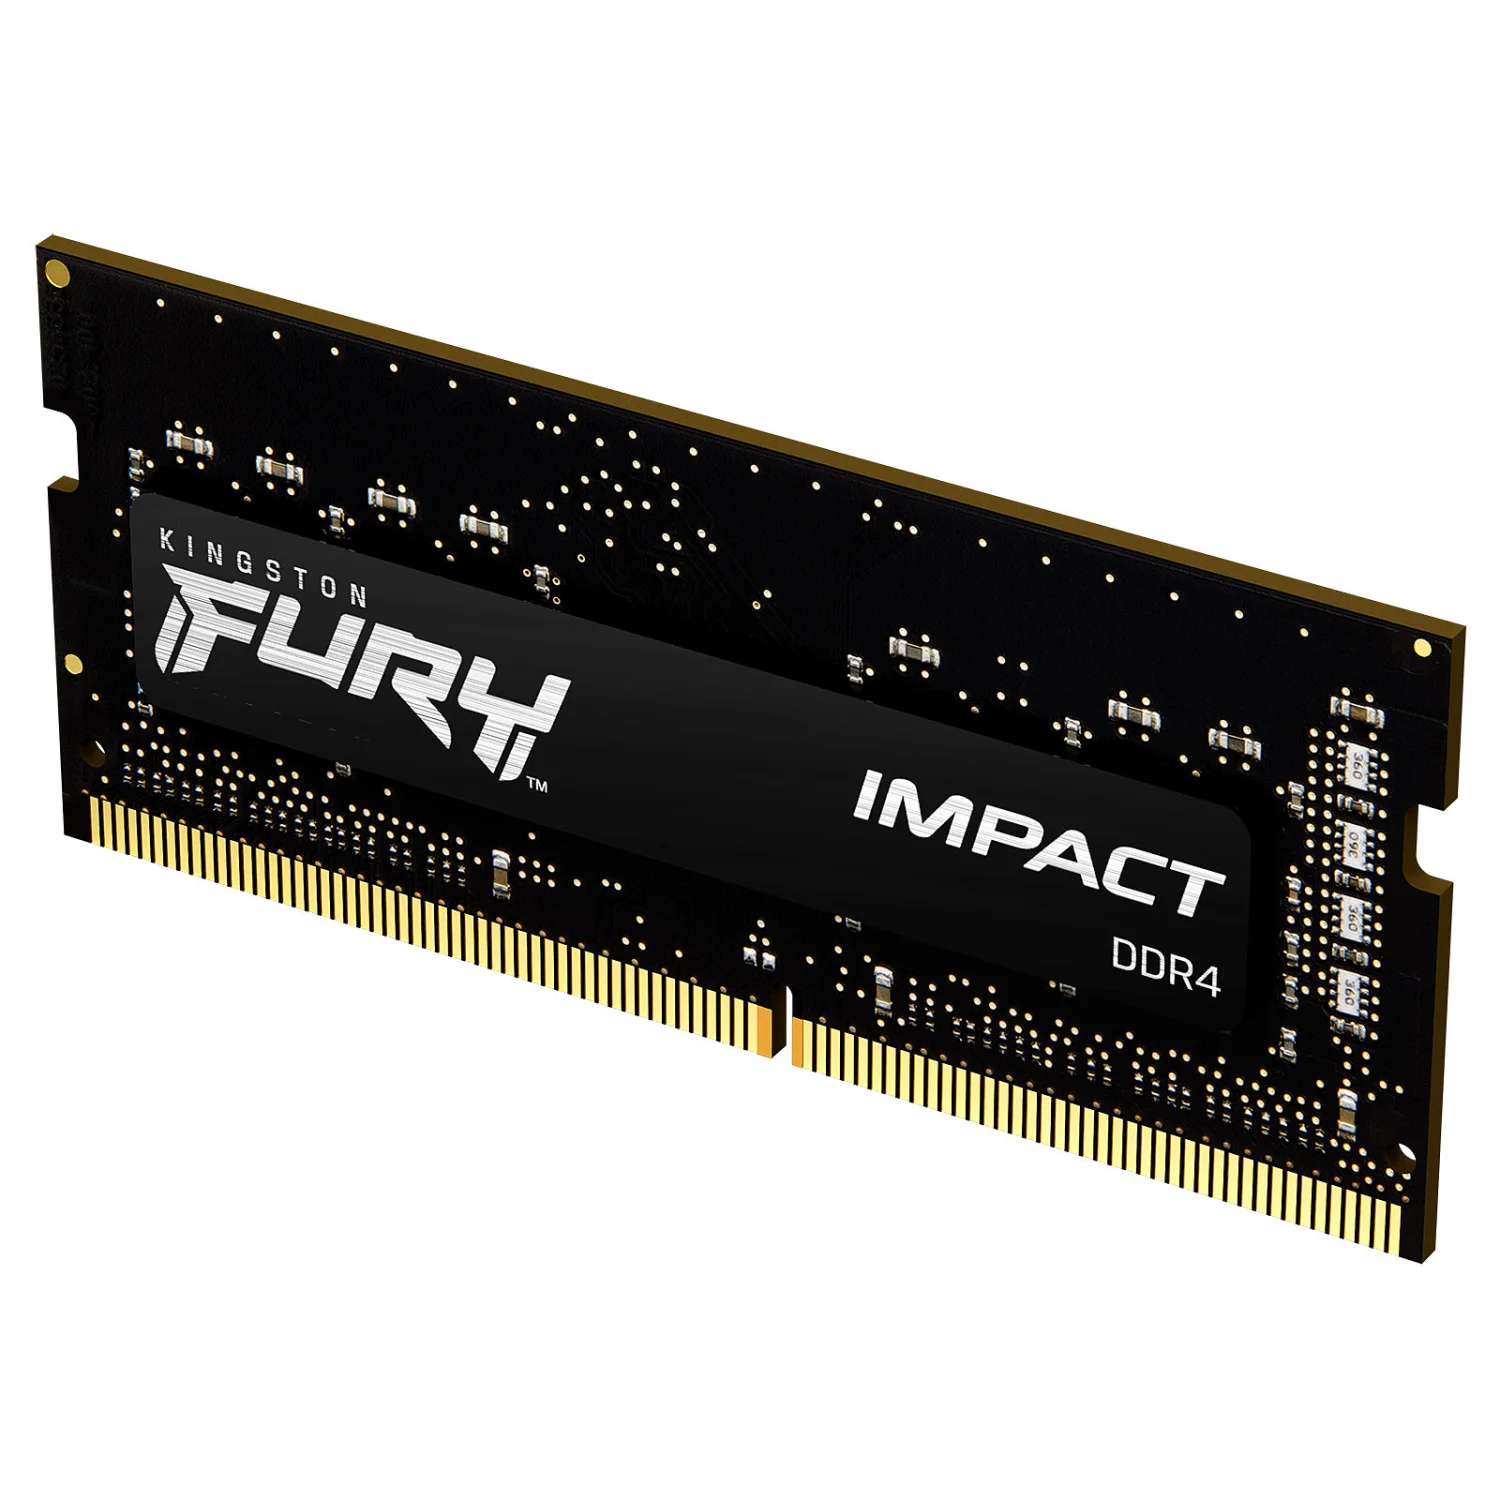 Memória para Notebook Kingston Fury Impact 8GB / DDR4 / 2666 - (KF426S15IB/8)